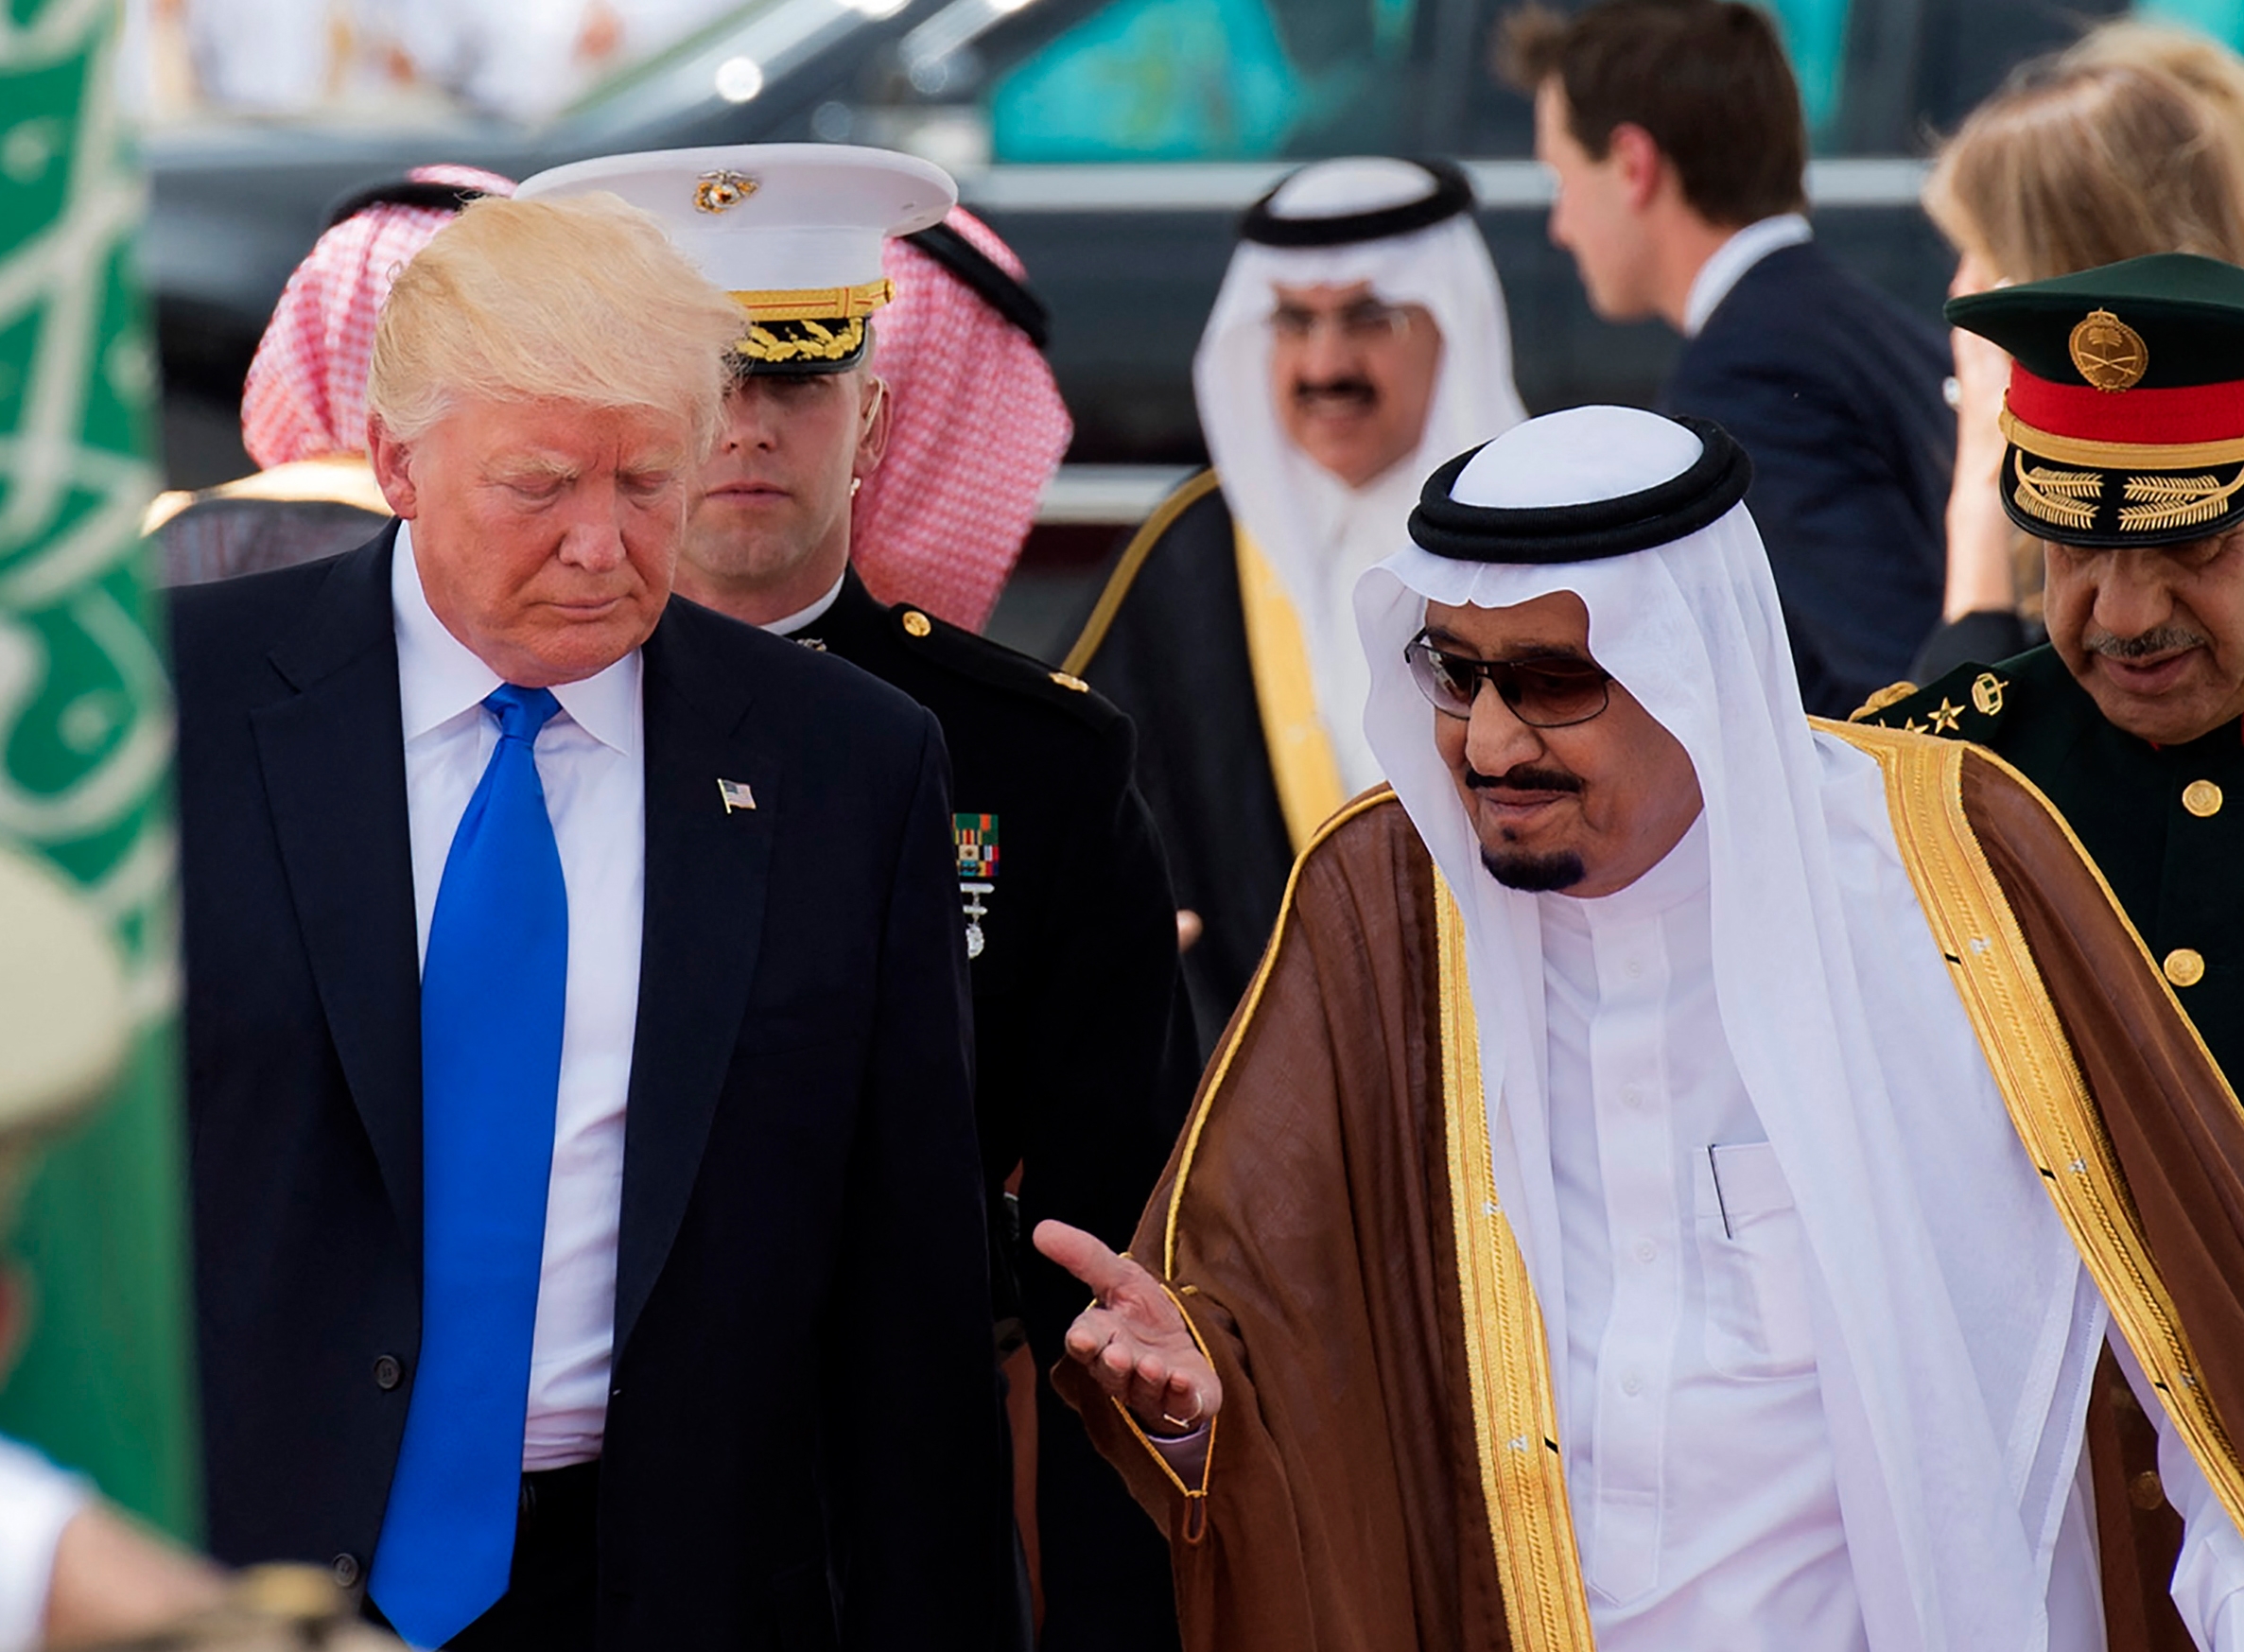 US President Donald Trump and Saudi King Salman bin Abdulaziz al-Saud take part in an arrival ceremony at the Saudi Royal Court in Riyadh on 20 May 2017.